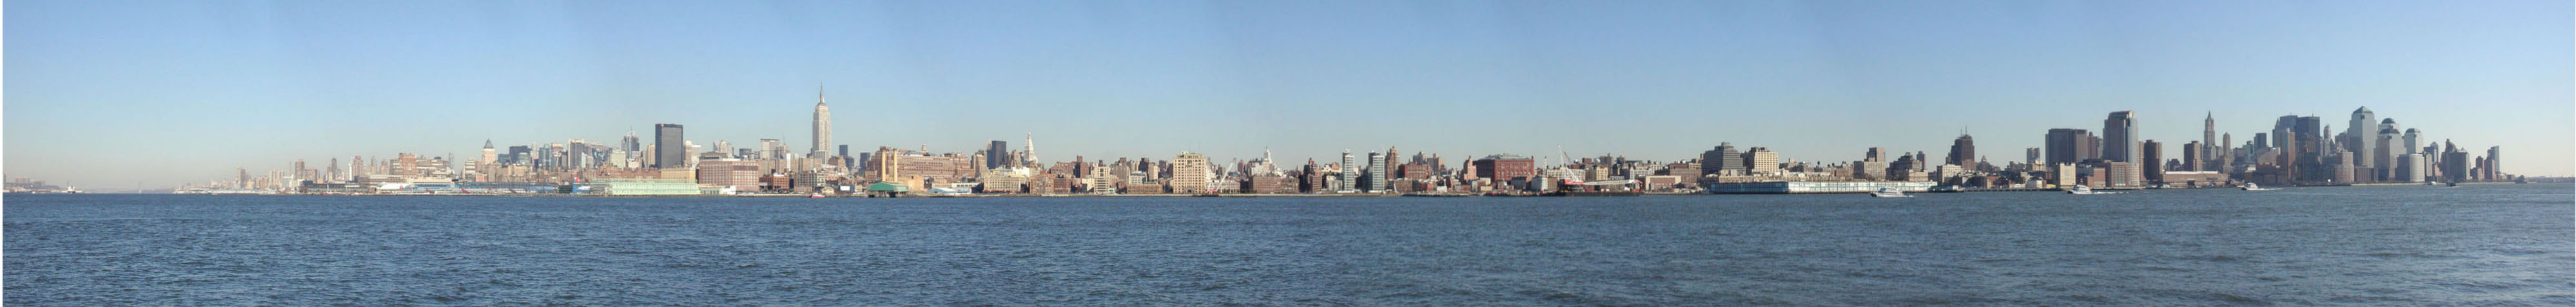 [Manhattan Skyline from www.worldfromtheweb.com]